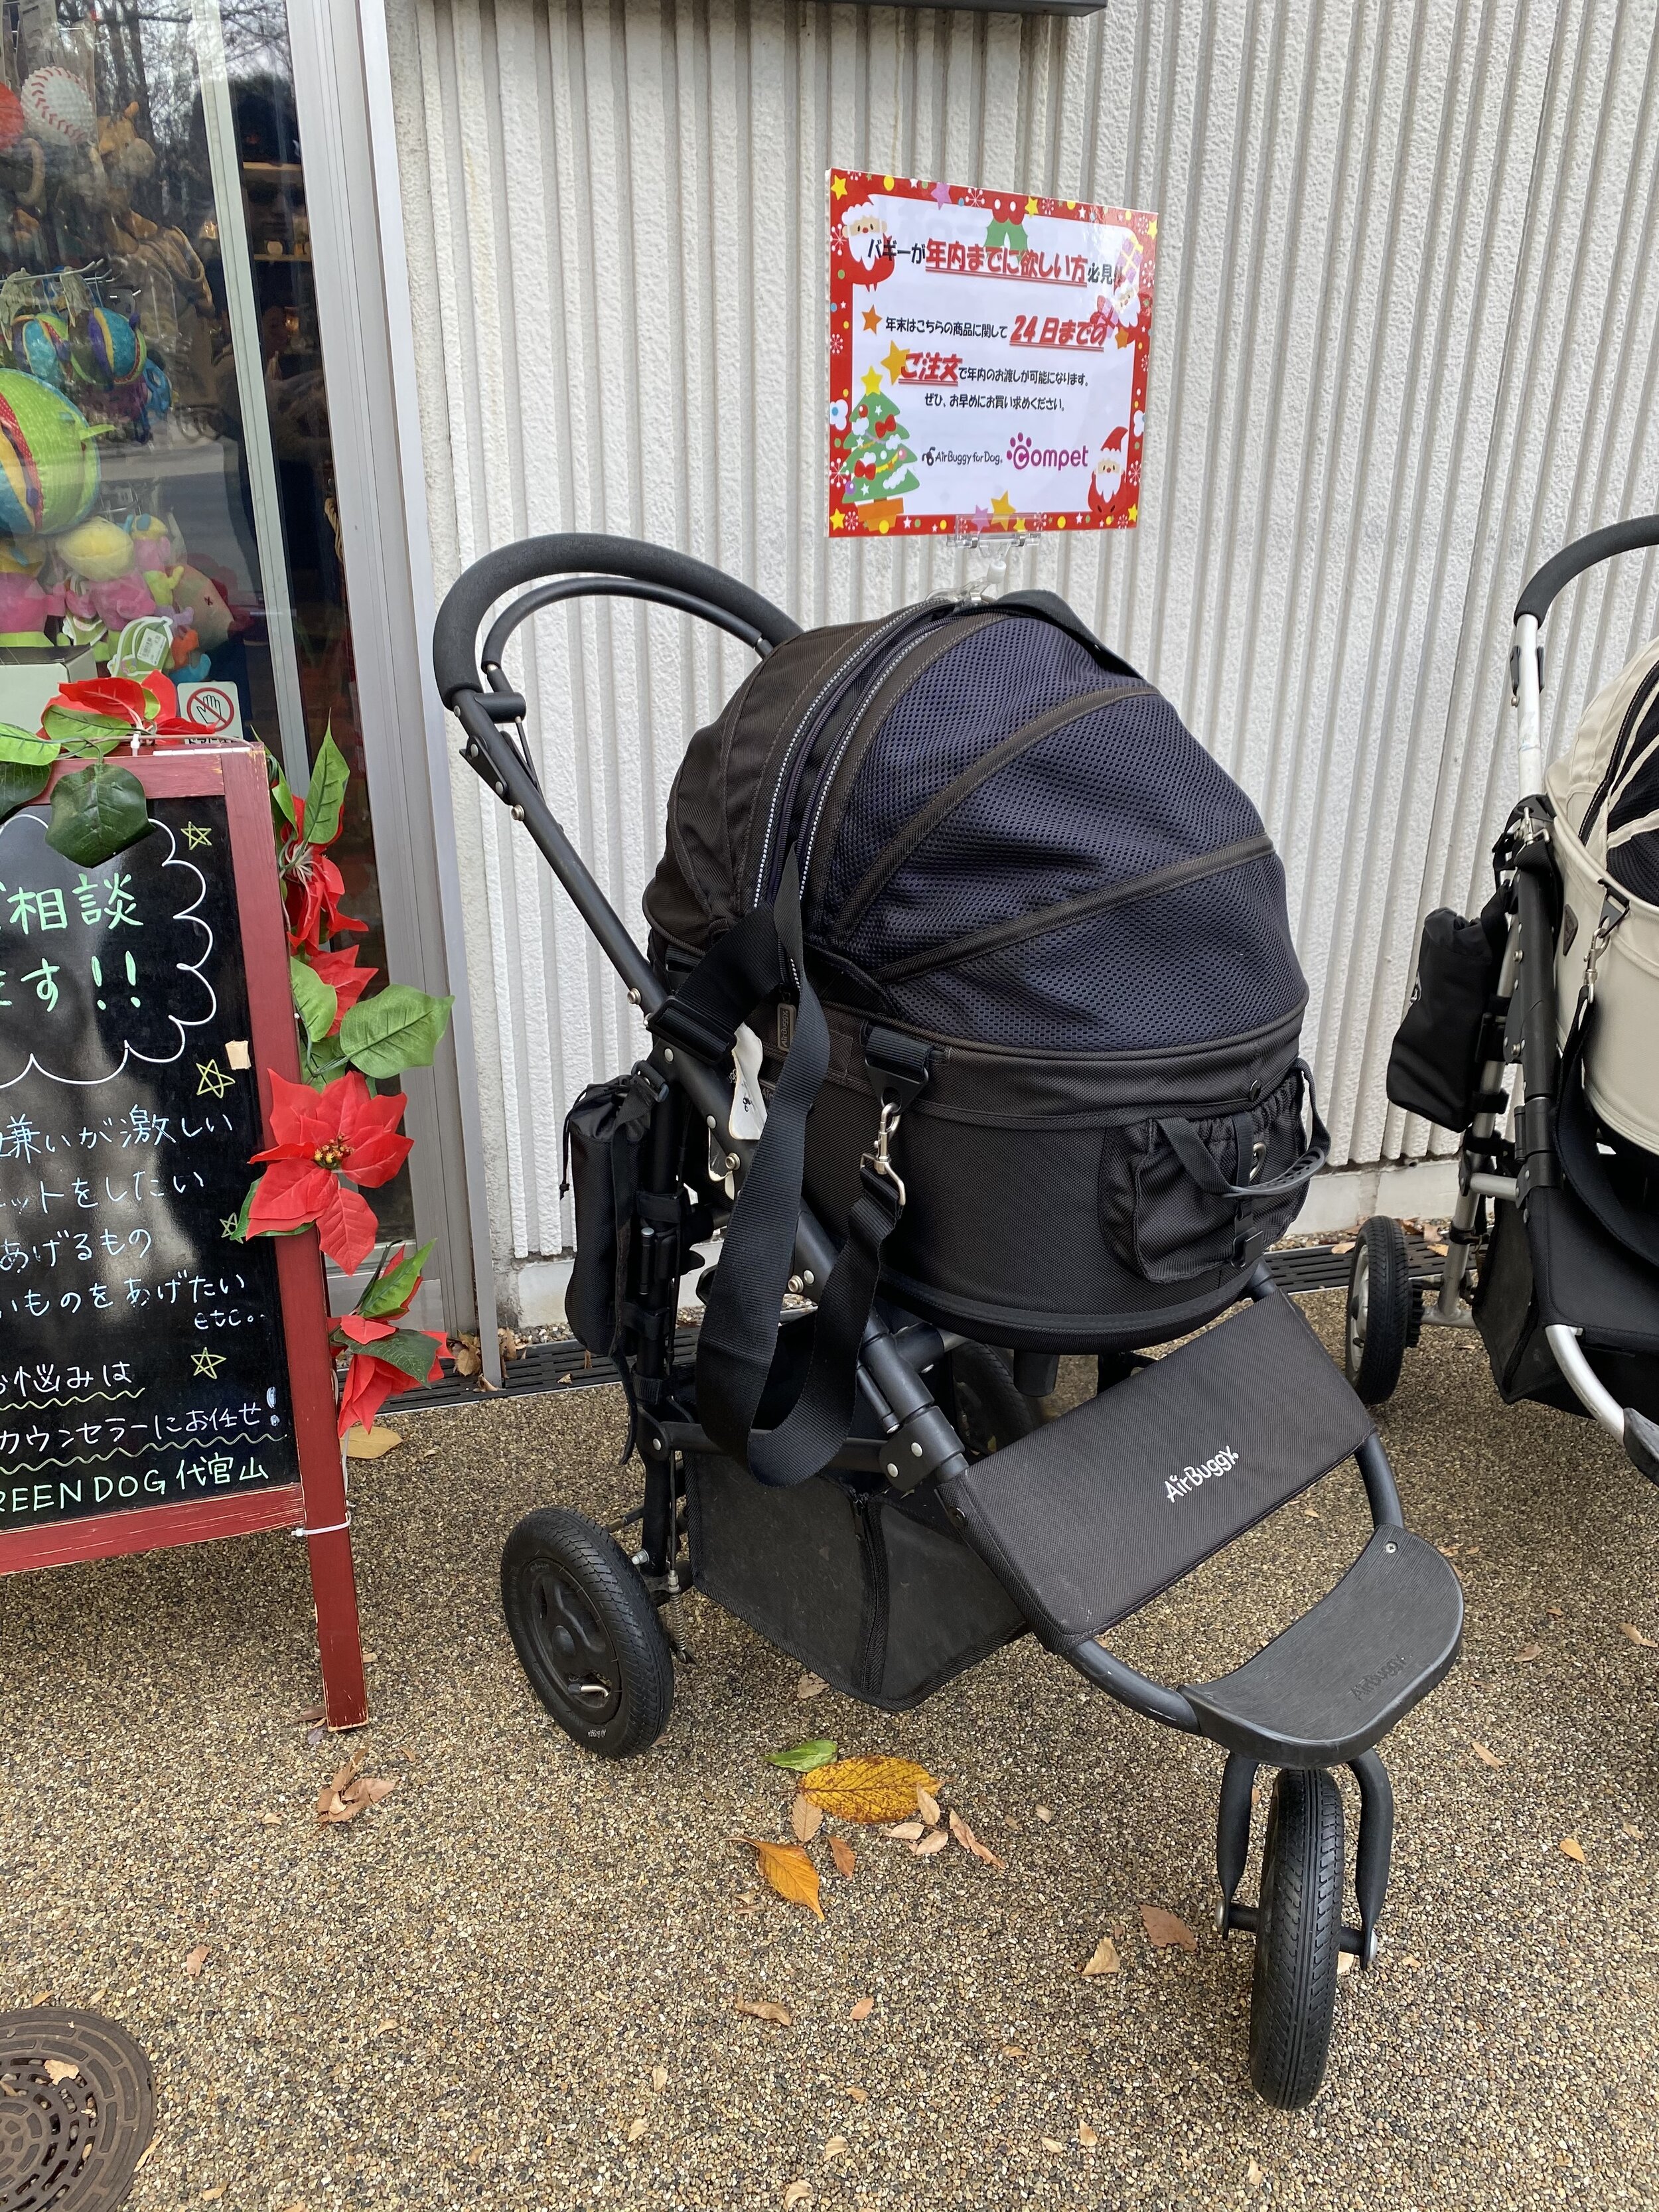 a japanese pet stroller - WANT!